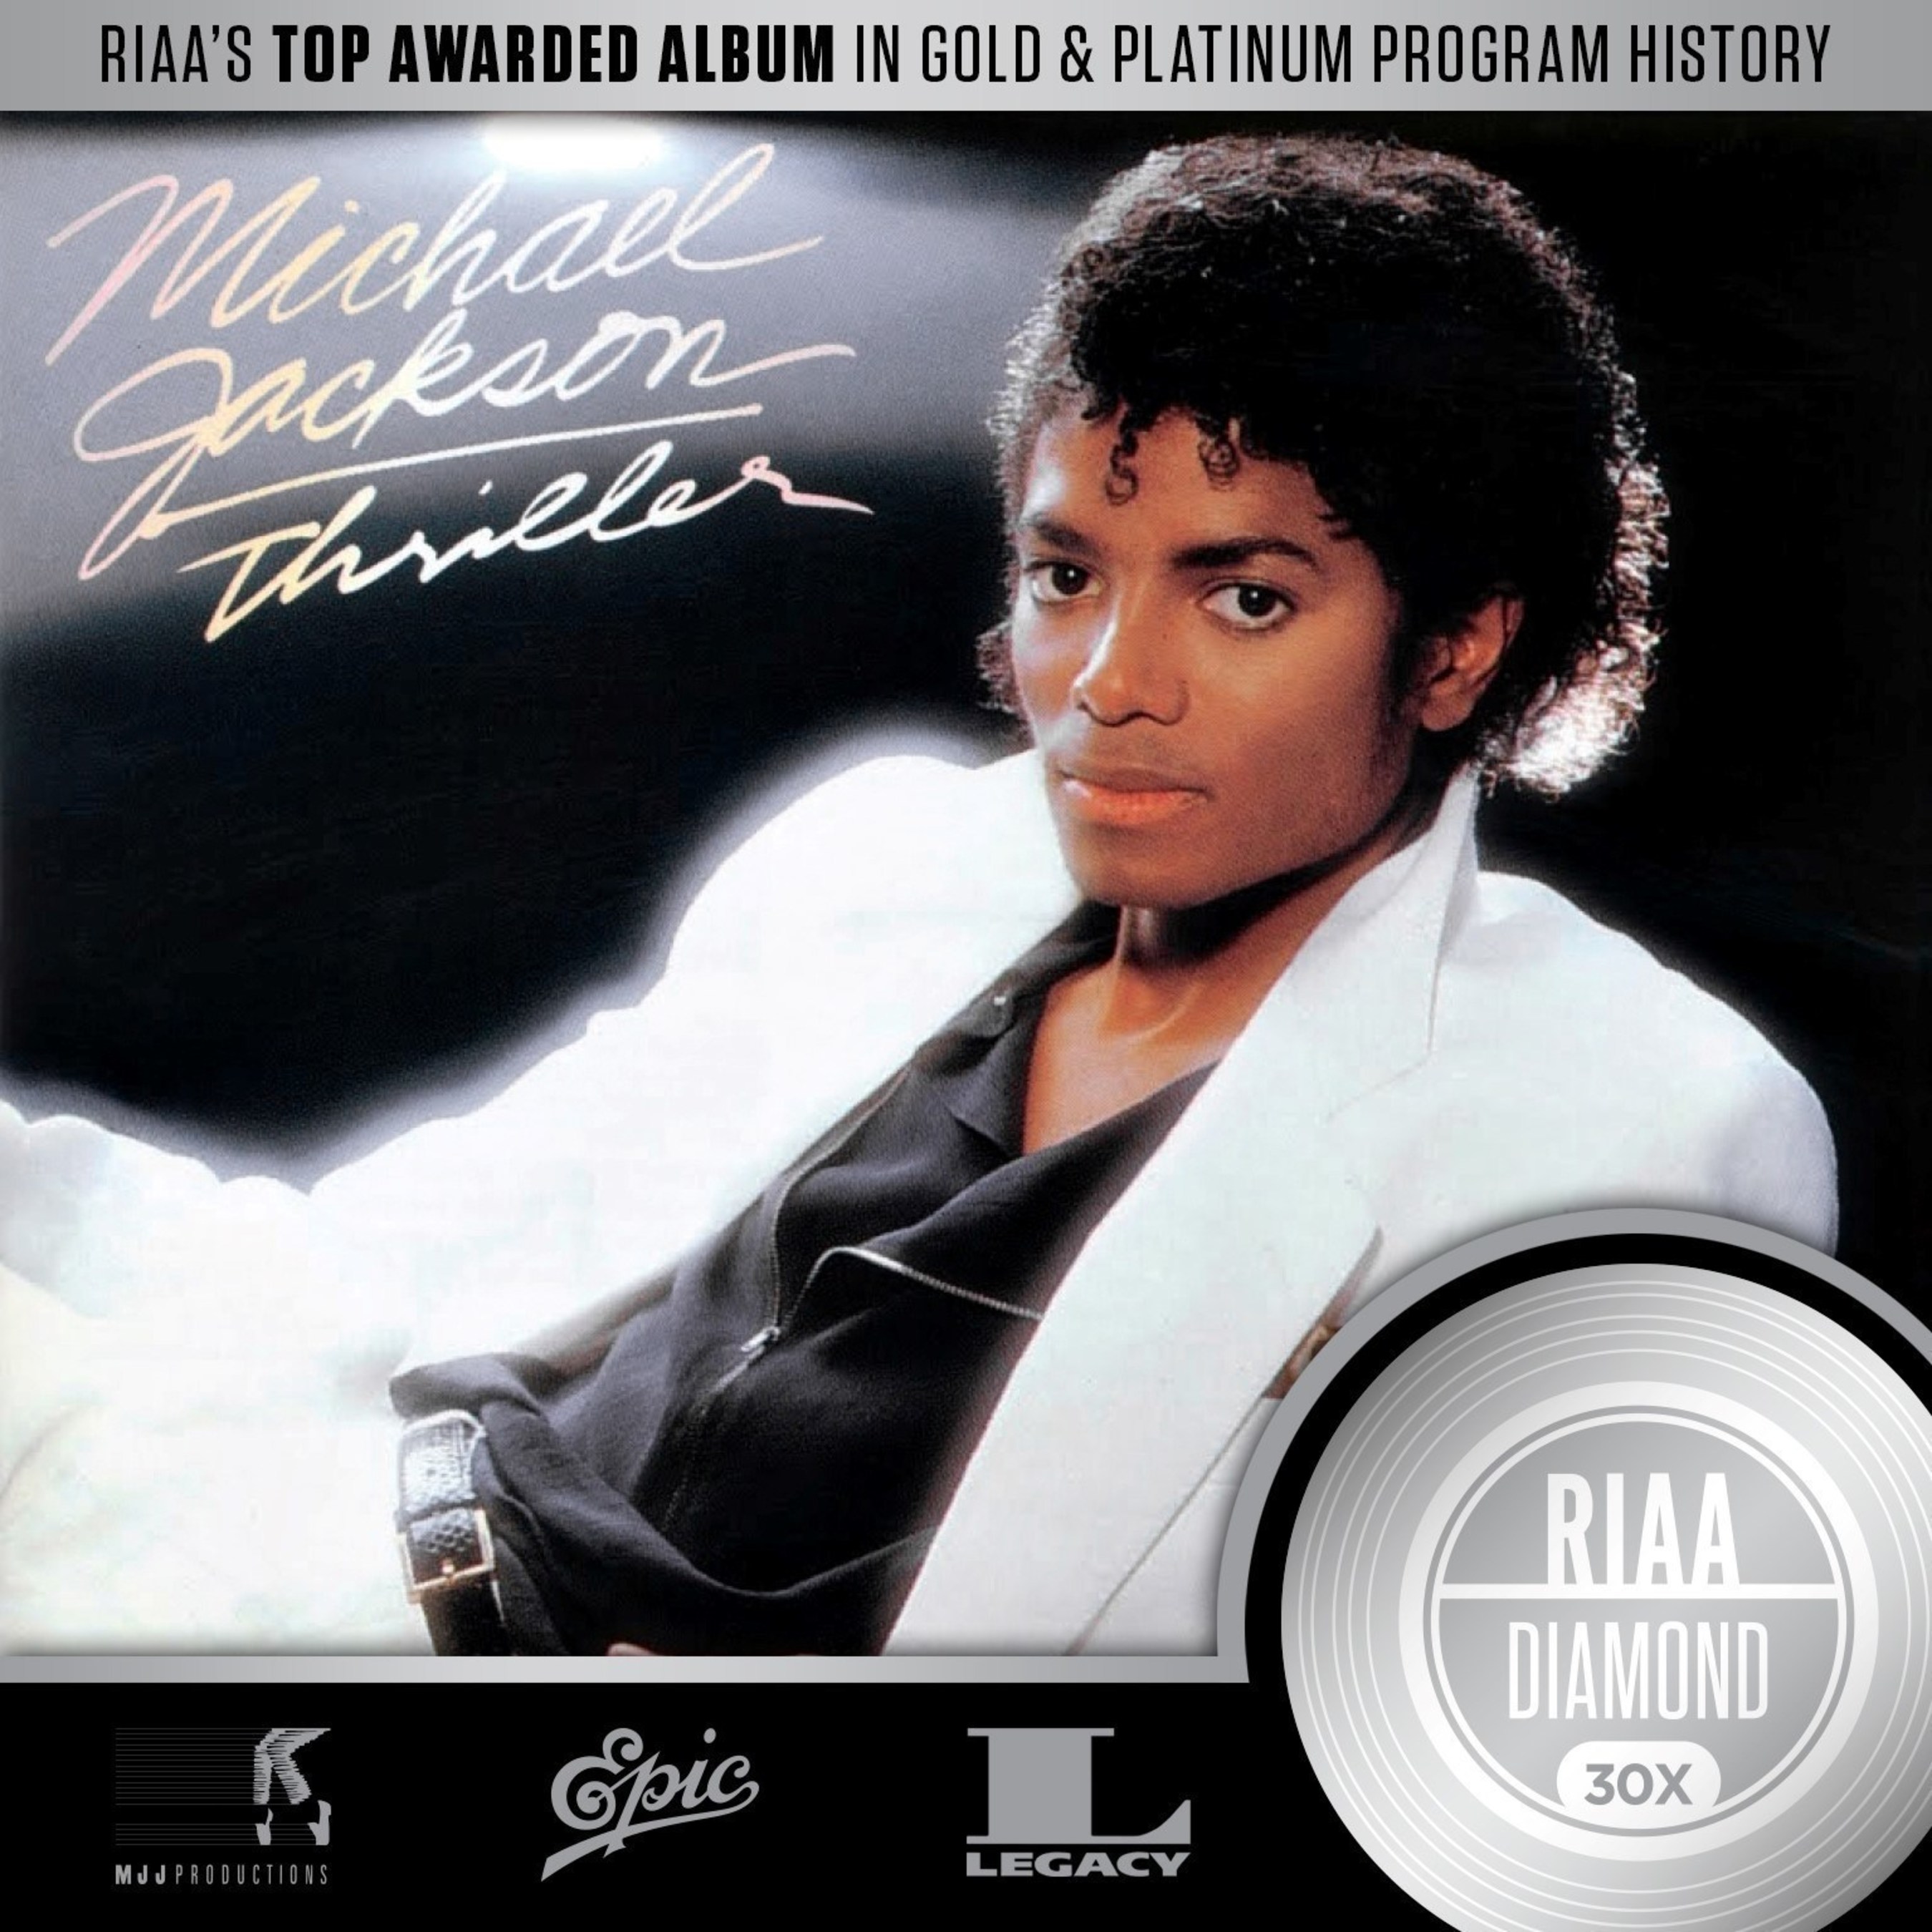 Michael Jackson History - Video Greatest Hits Korean Video CD